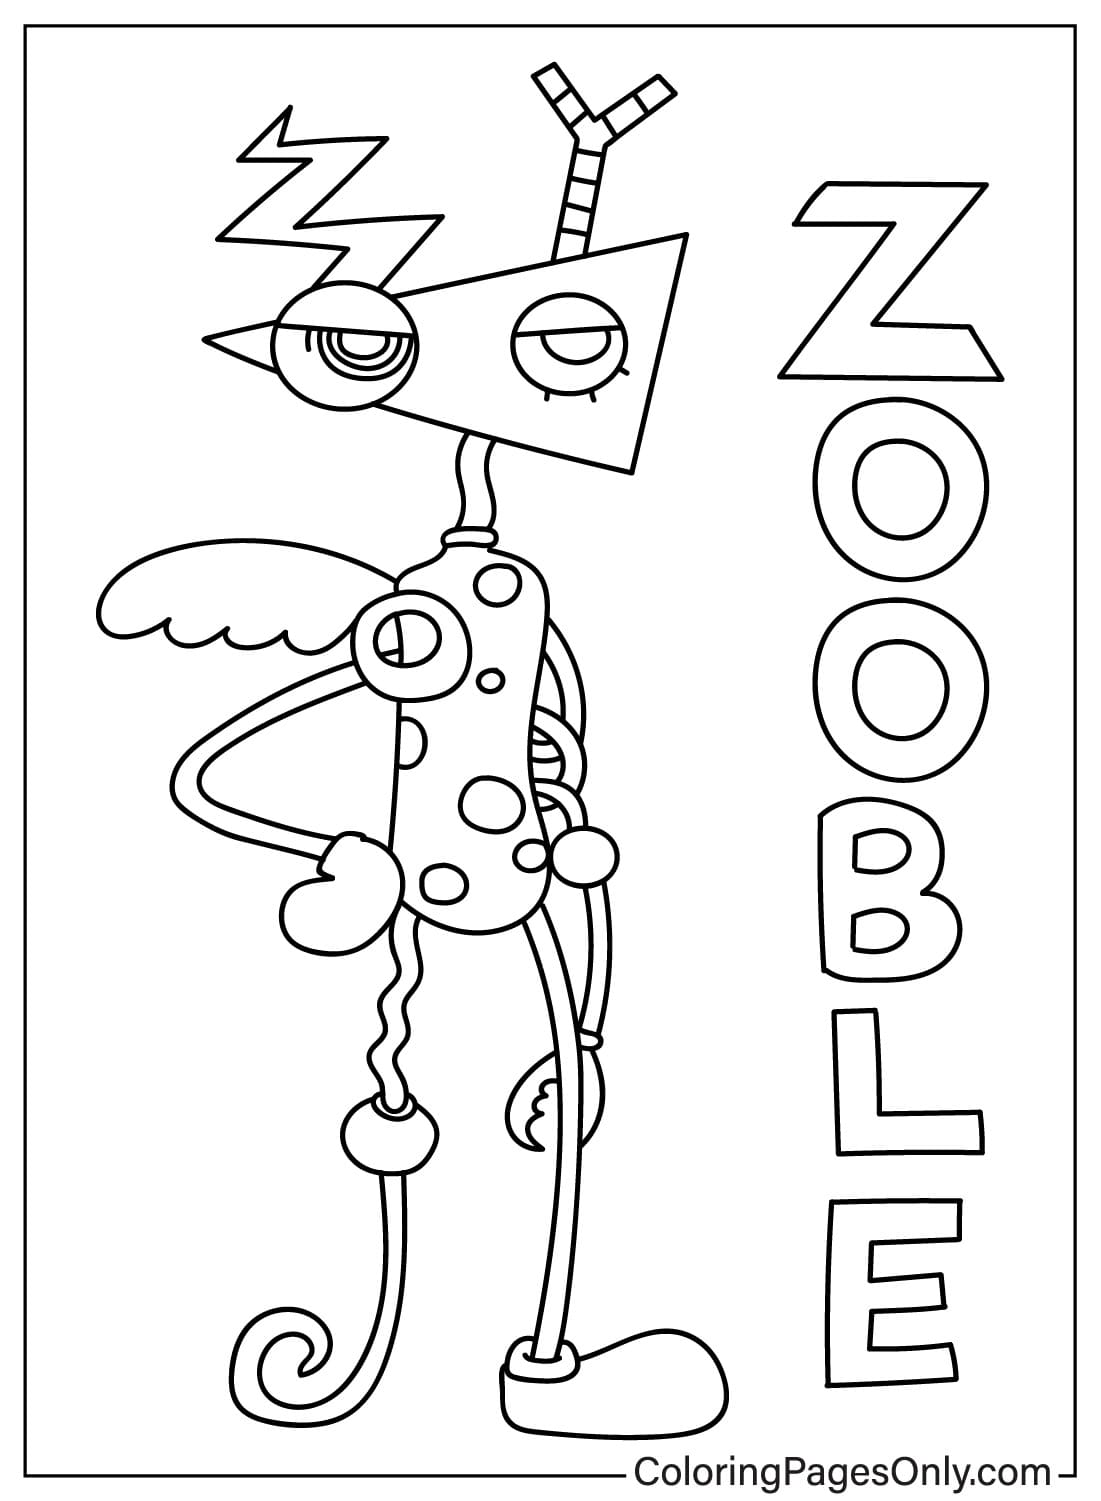 Coloriage Zooble de Zooble